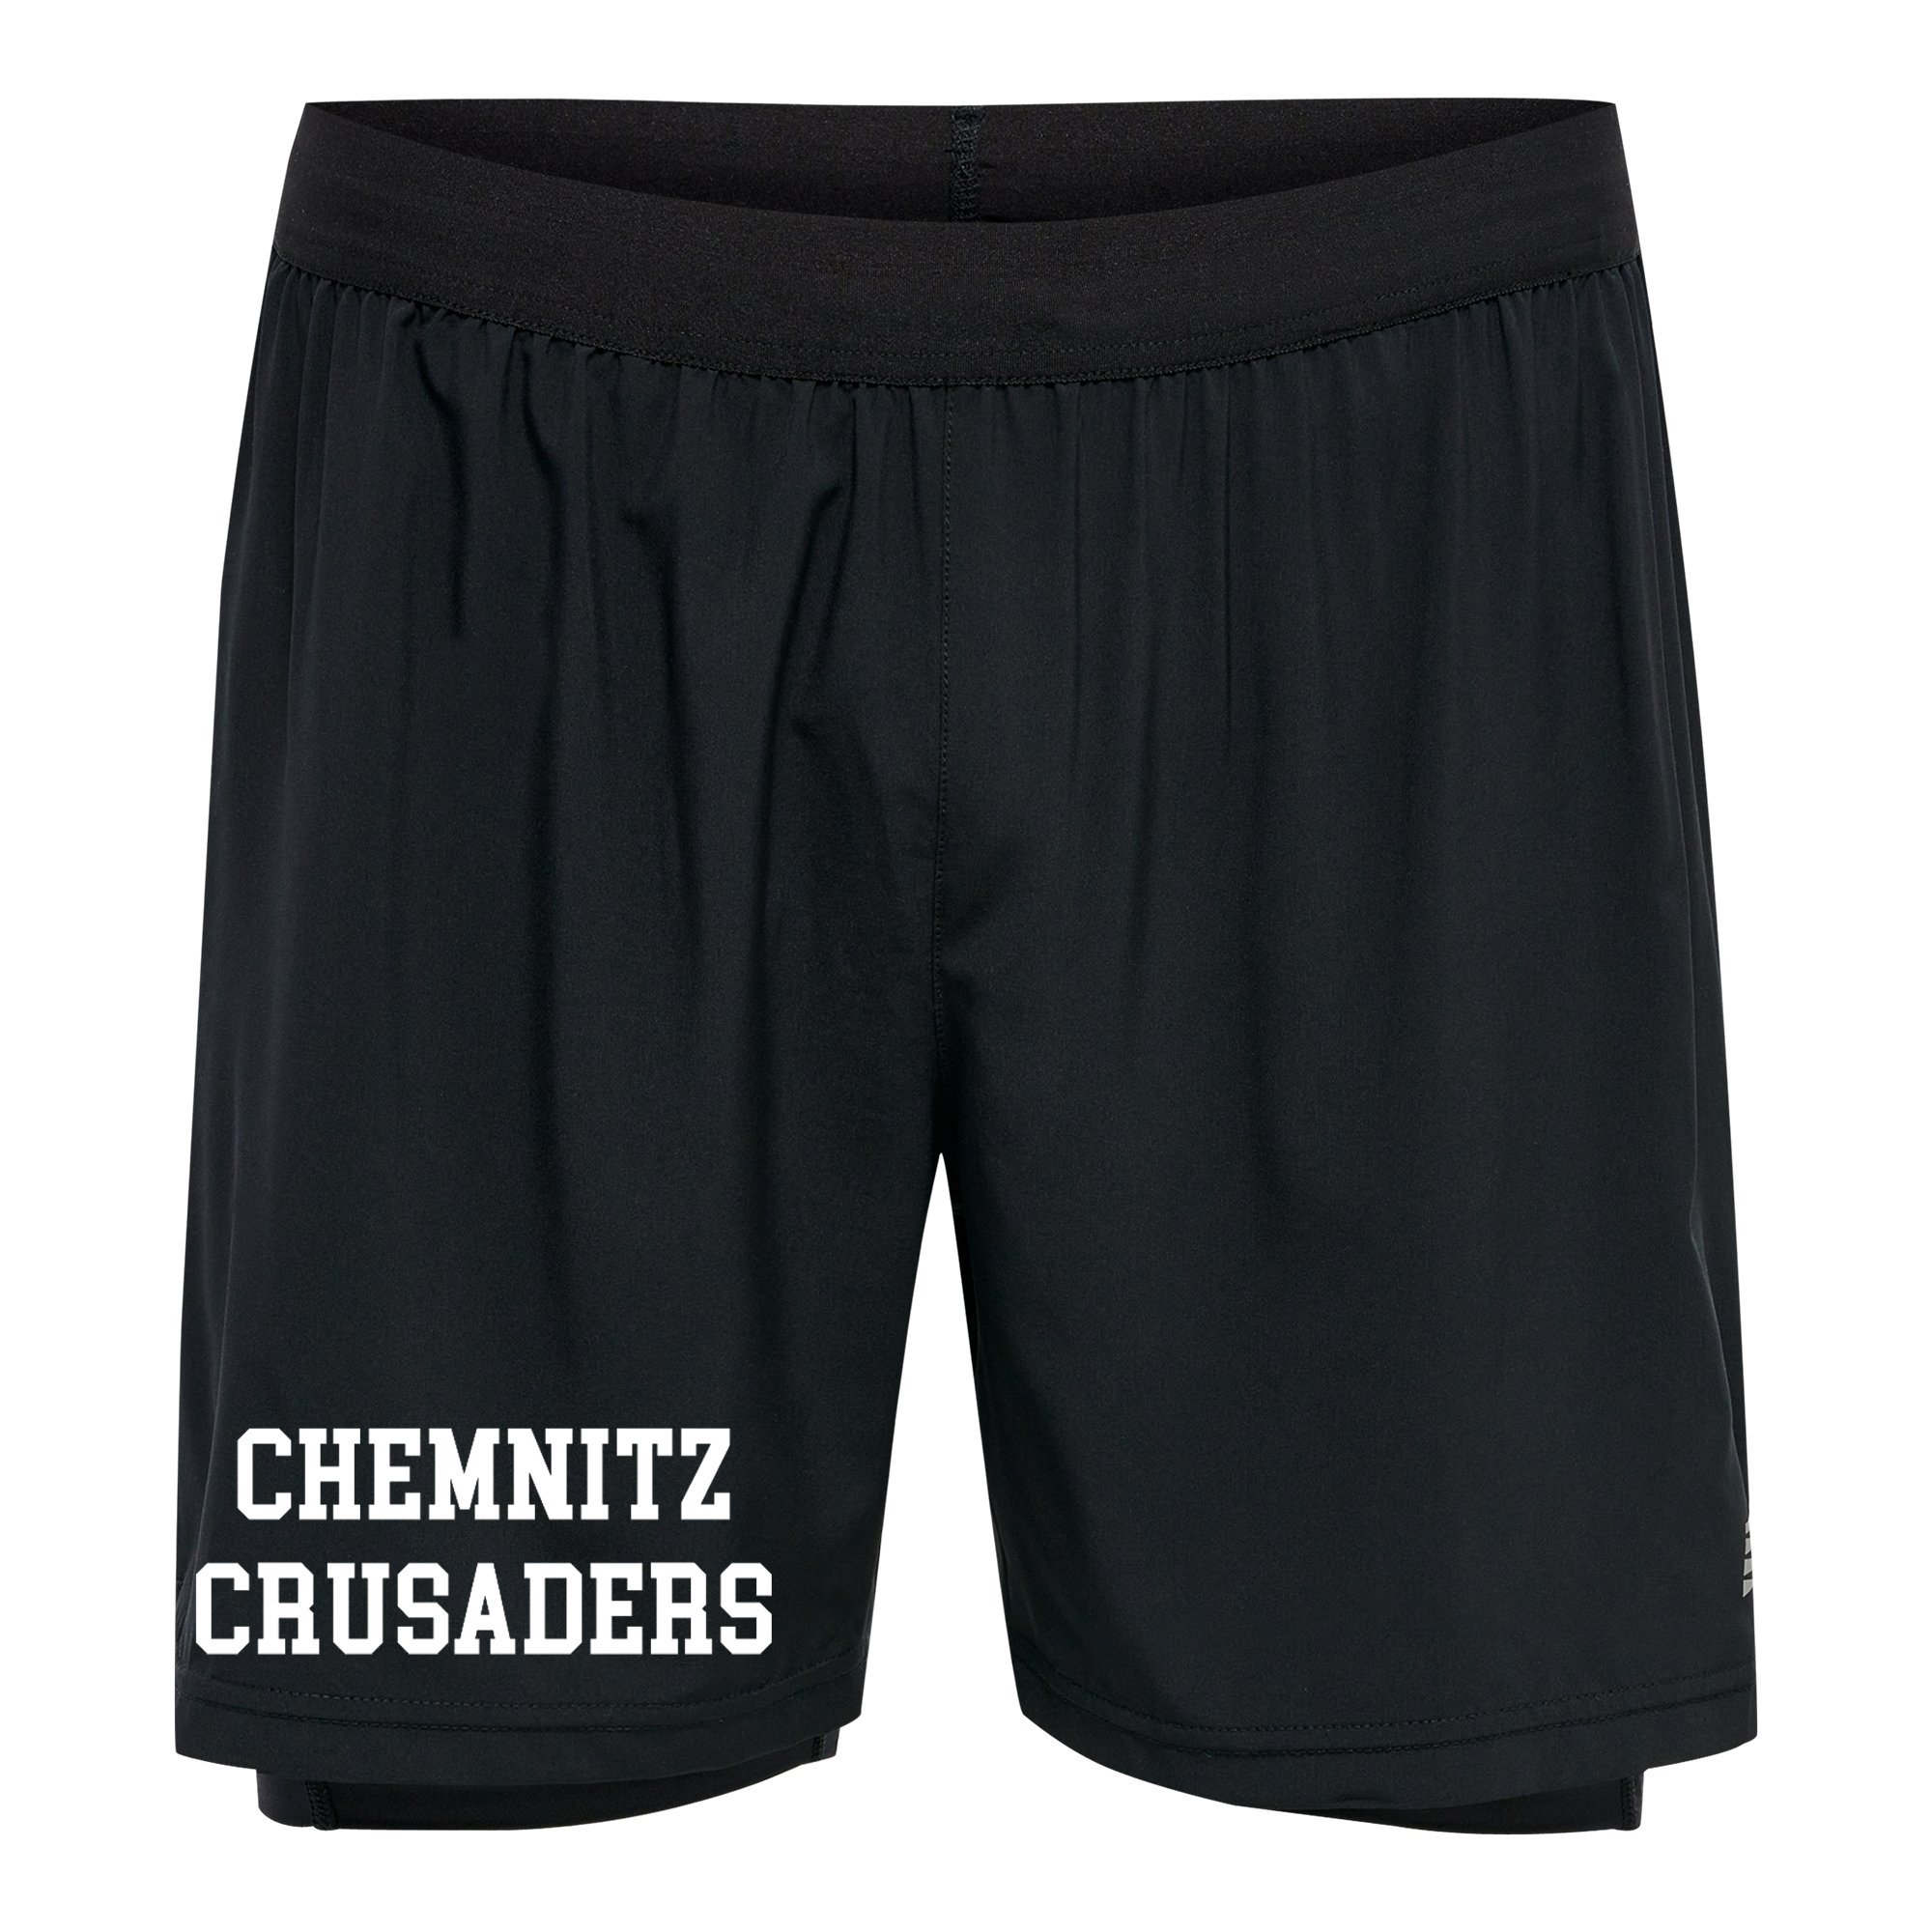 Chemnitz Crusaders 2-In-1 Shorts